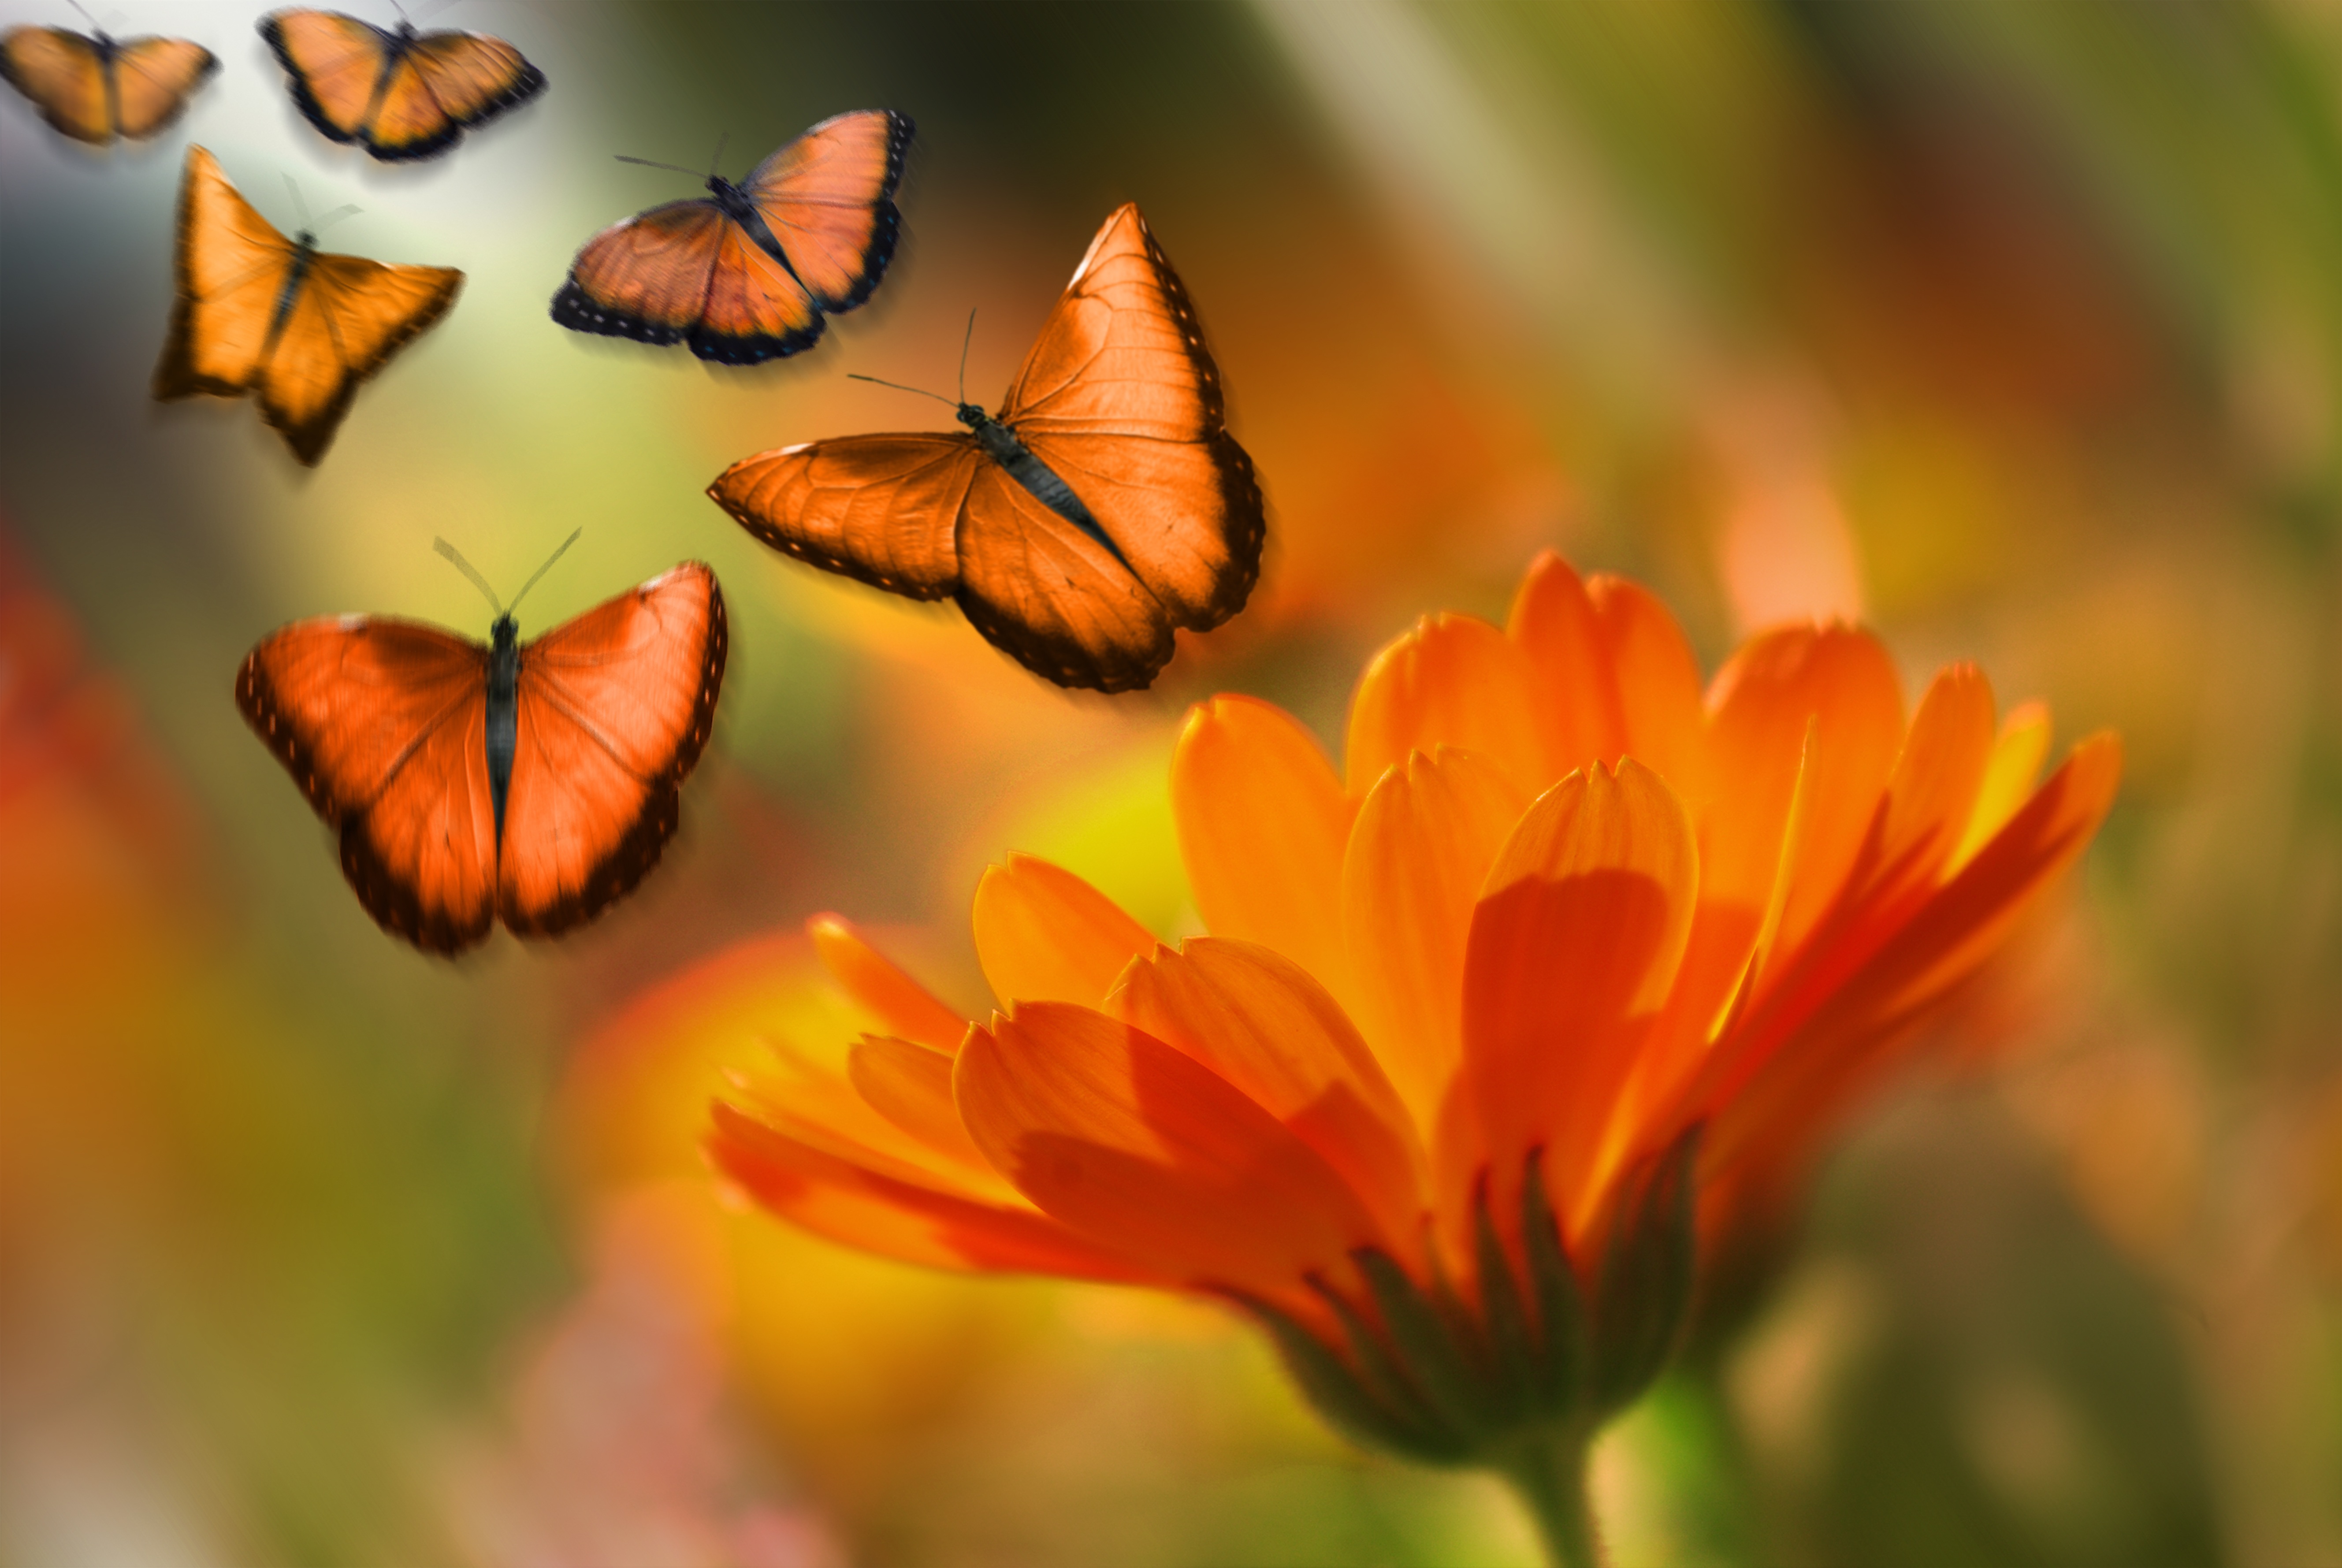 Butterflies in the garden photo